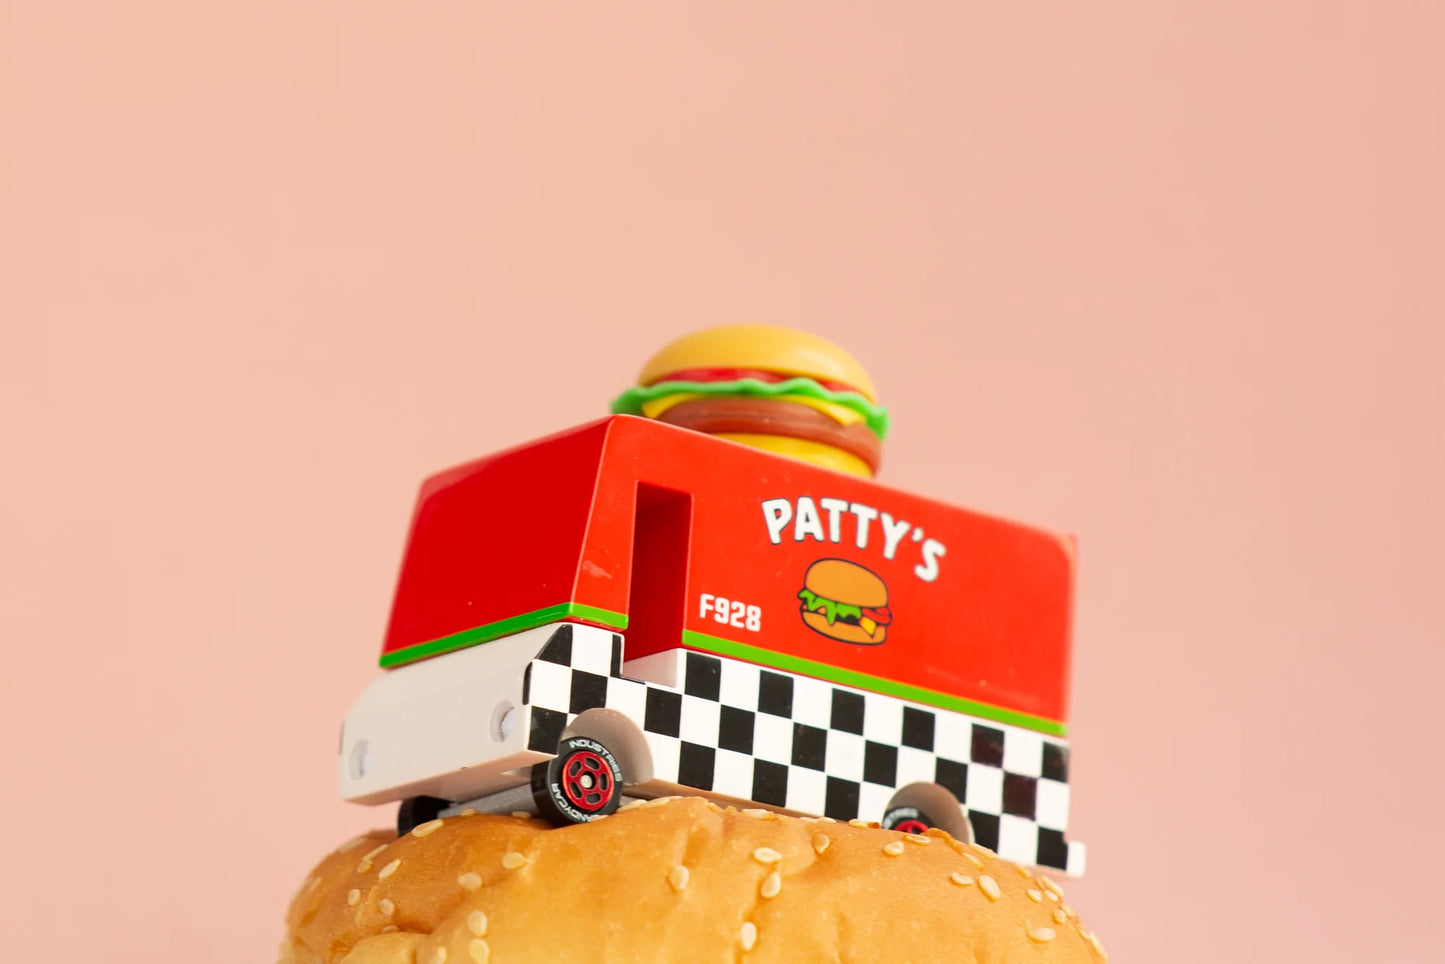 Patty's Hamburger Van